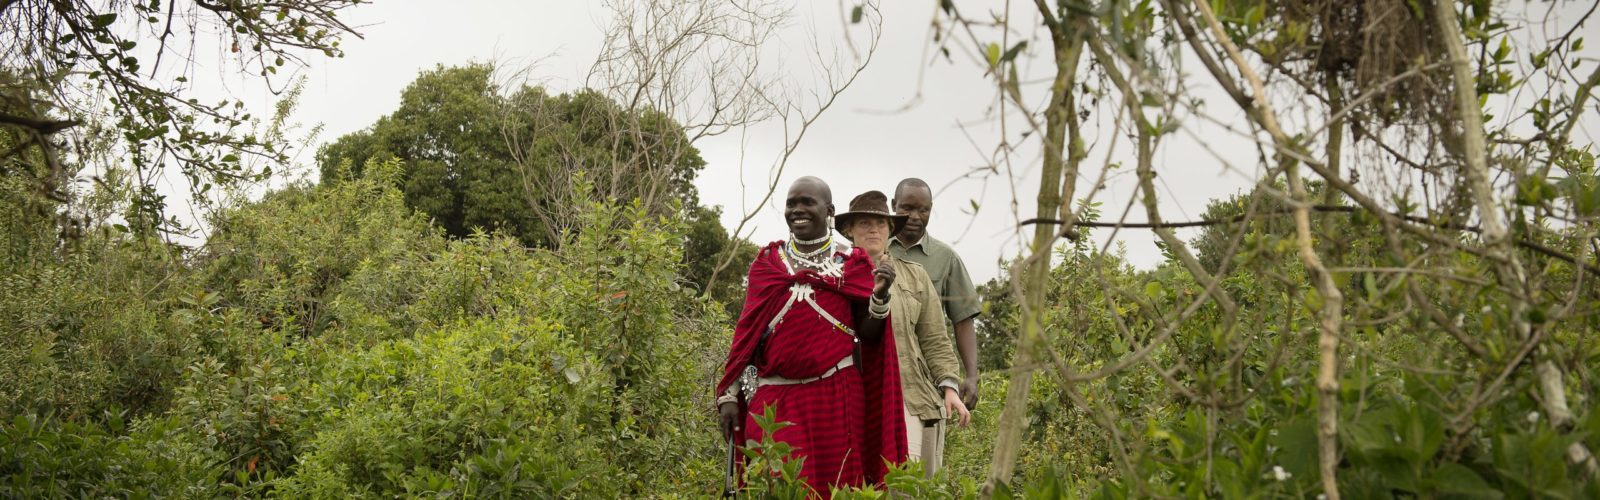 Highlands-Ngorongoro-guests-walking